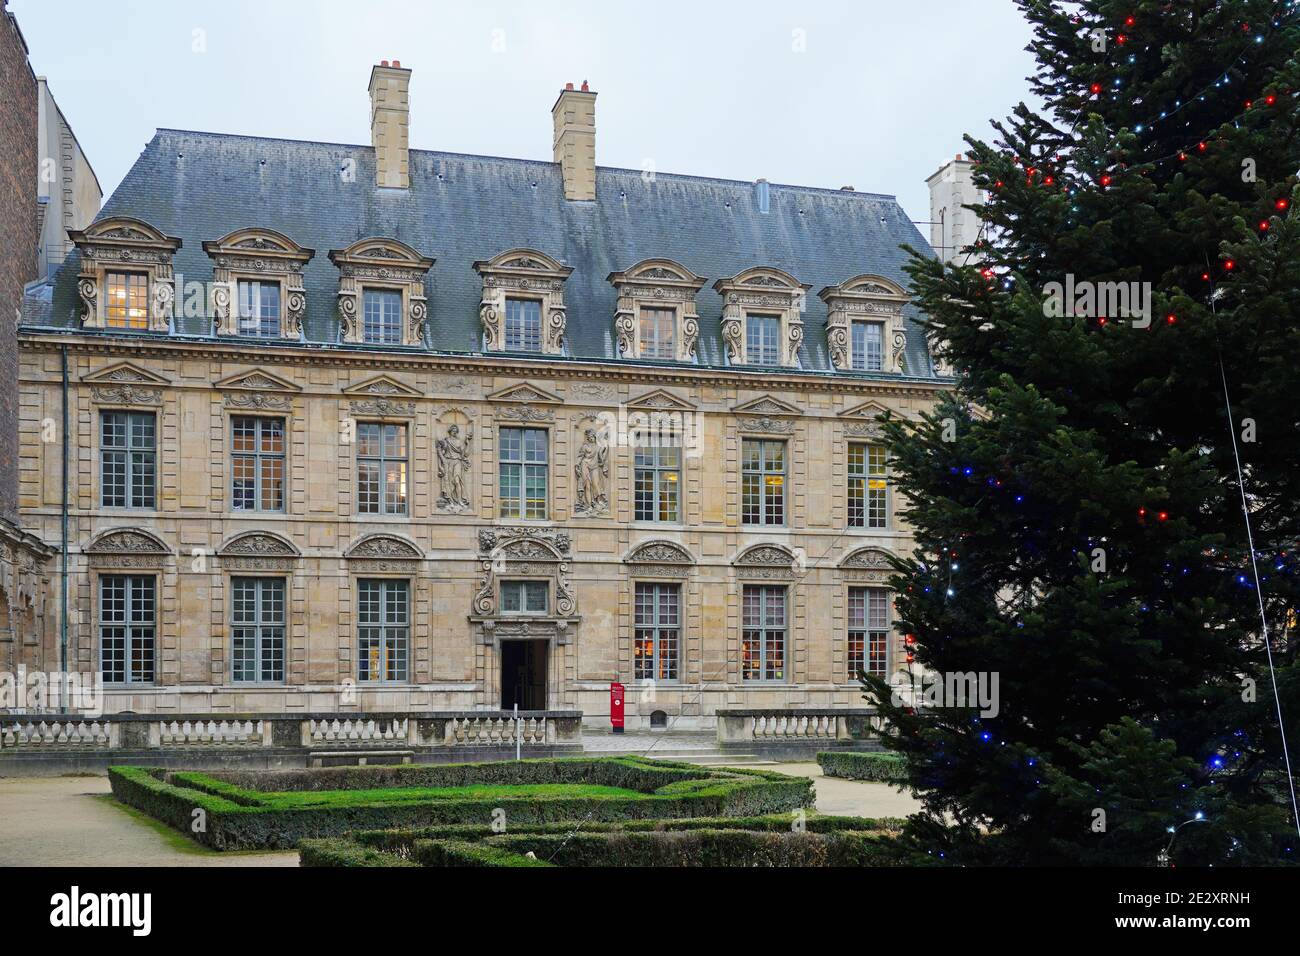 PARIS, FRANCE -5 JAN 2021- View of the historic Hotel de Sully, a landmark private mansion near the Place des Vosges in the Marais neighborhood of Par Stock Photo